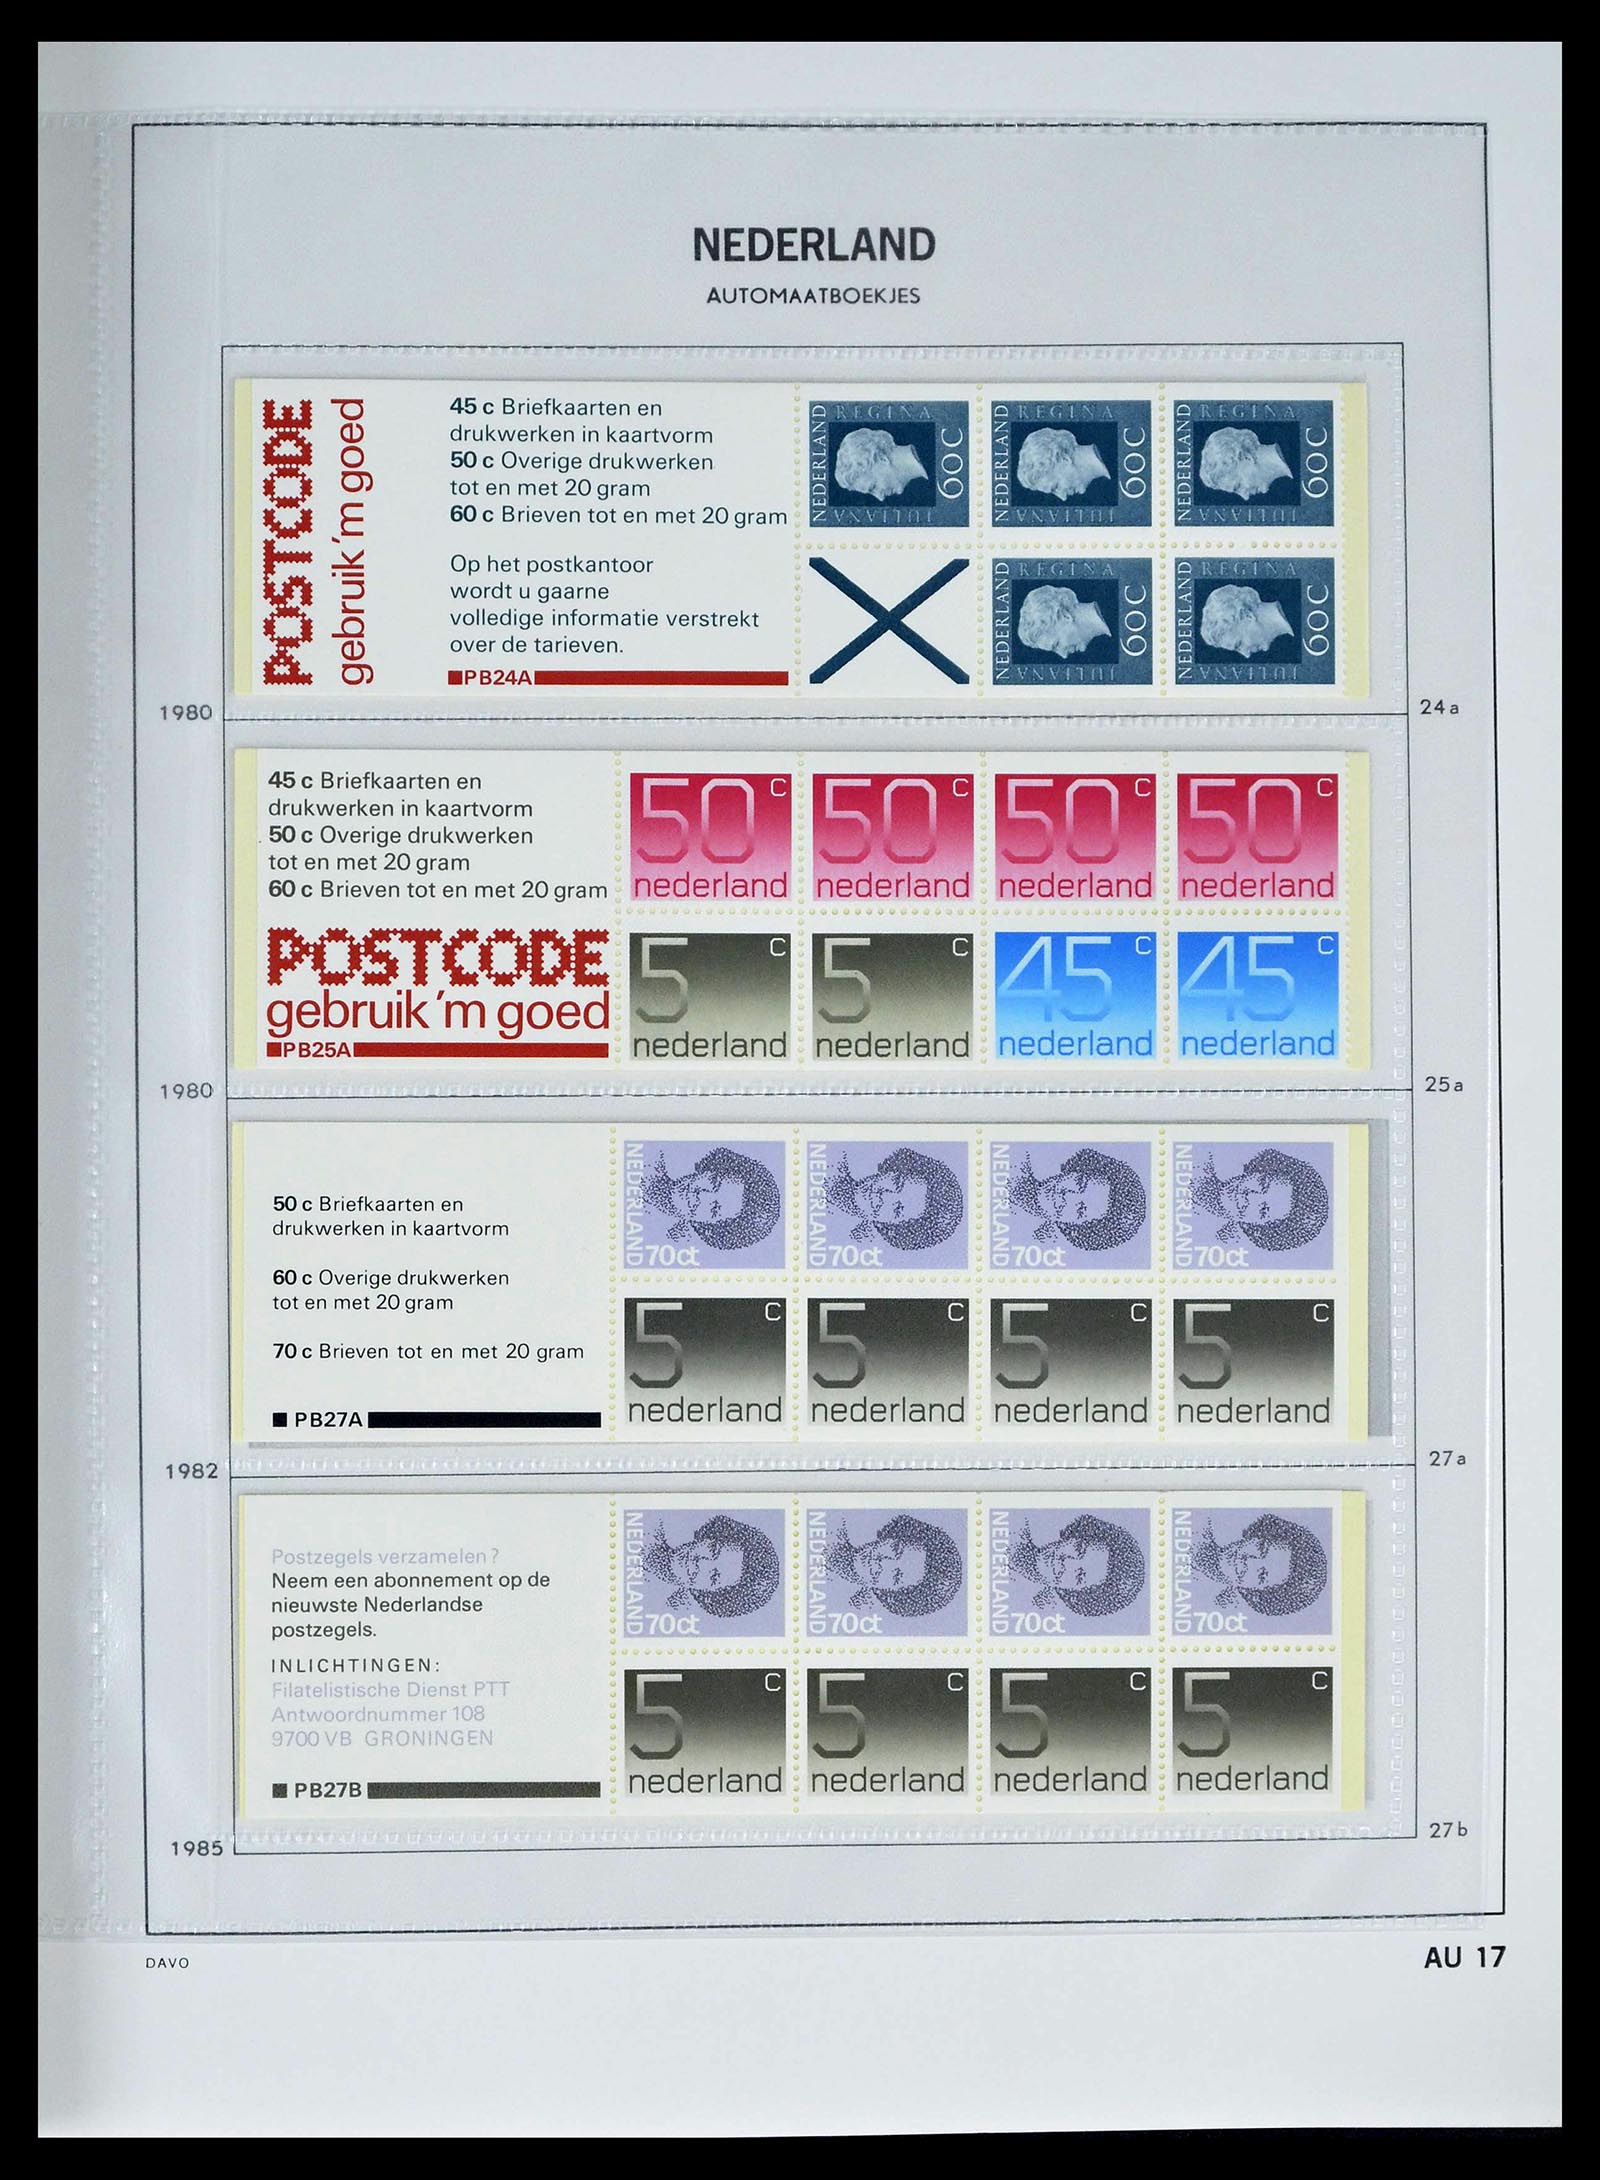 39362 0017 - Stamp collection 39362 Netherlands stamp booklets 1964-2003.